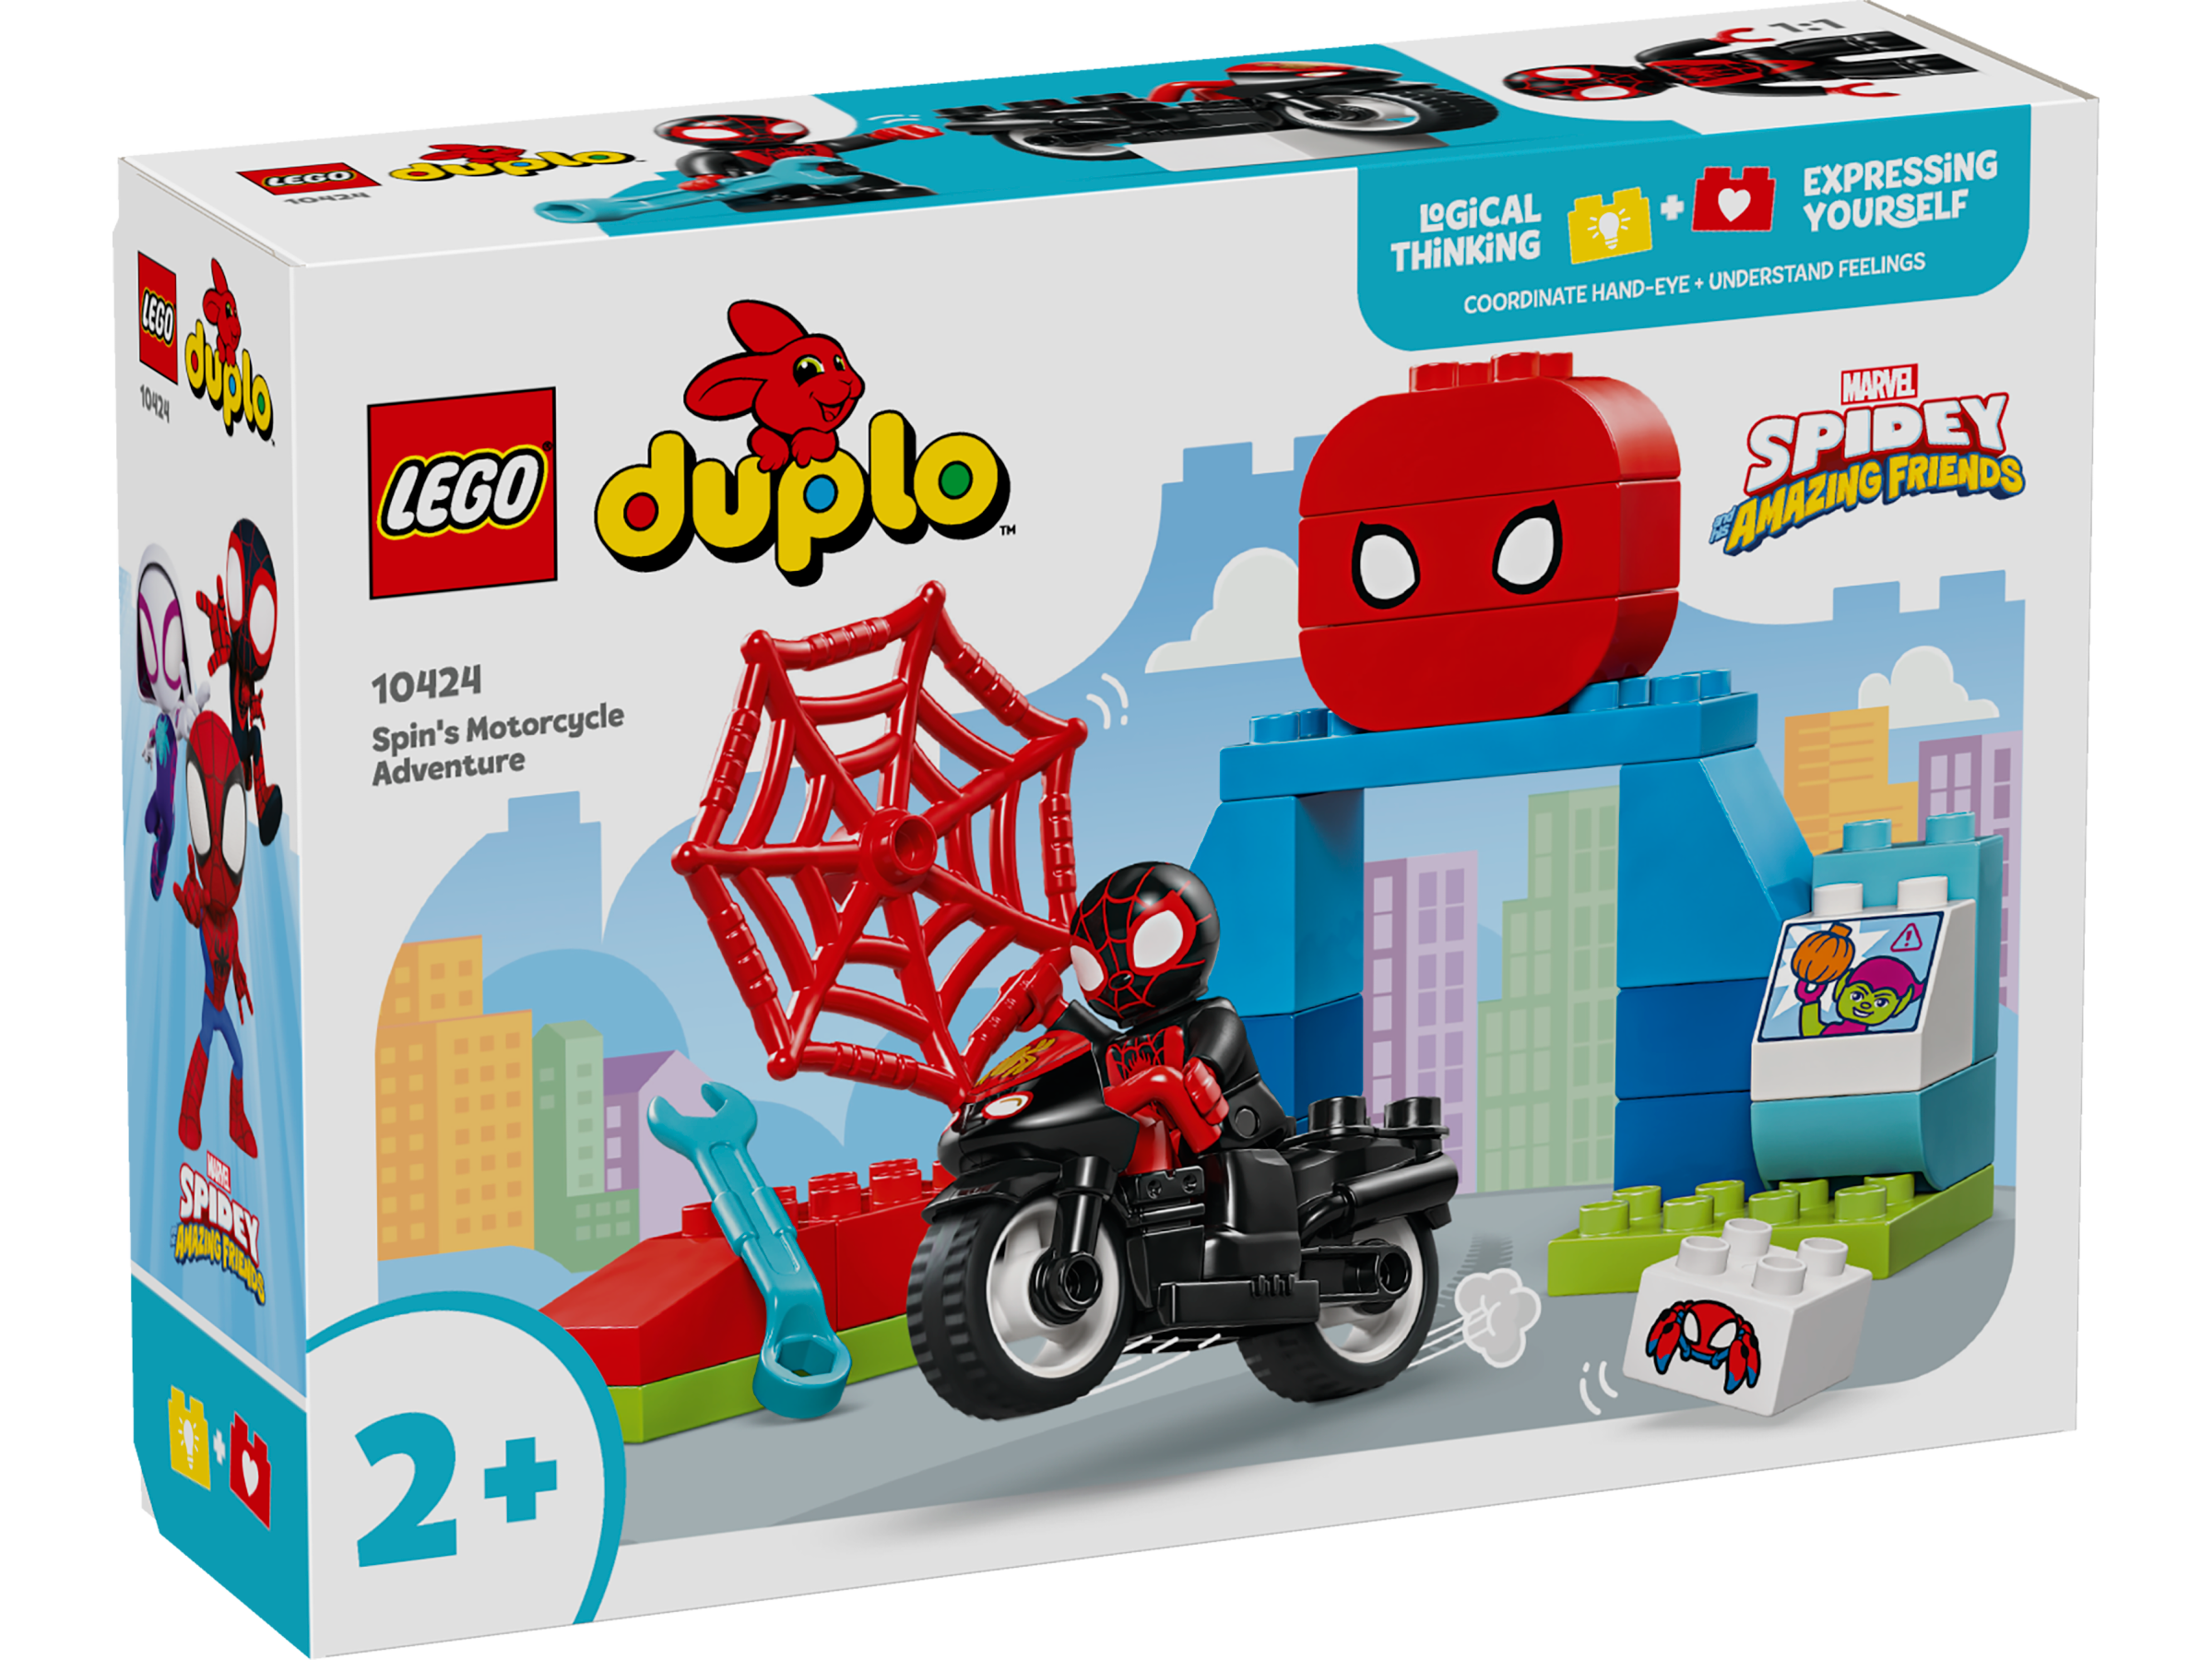 LEGO® DUPLO® 10424 Spin's Motorcycle Adventure